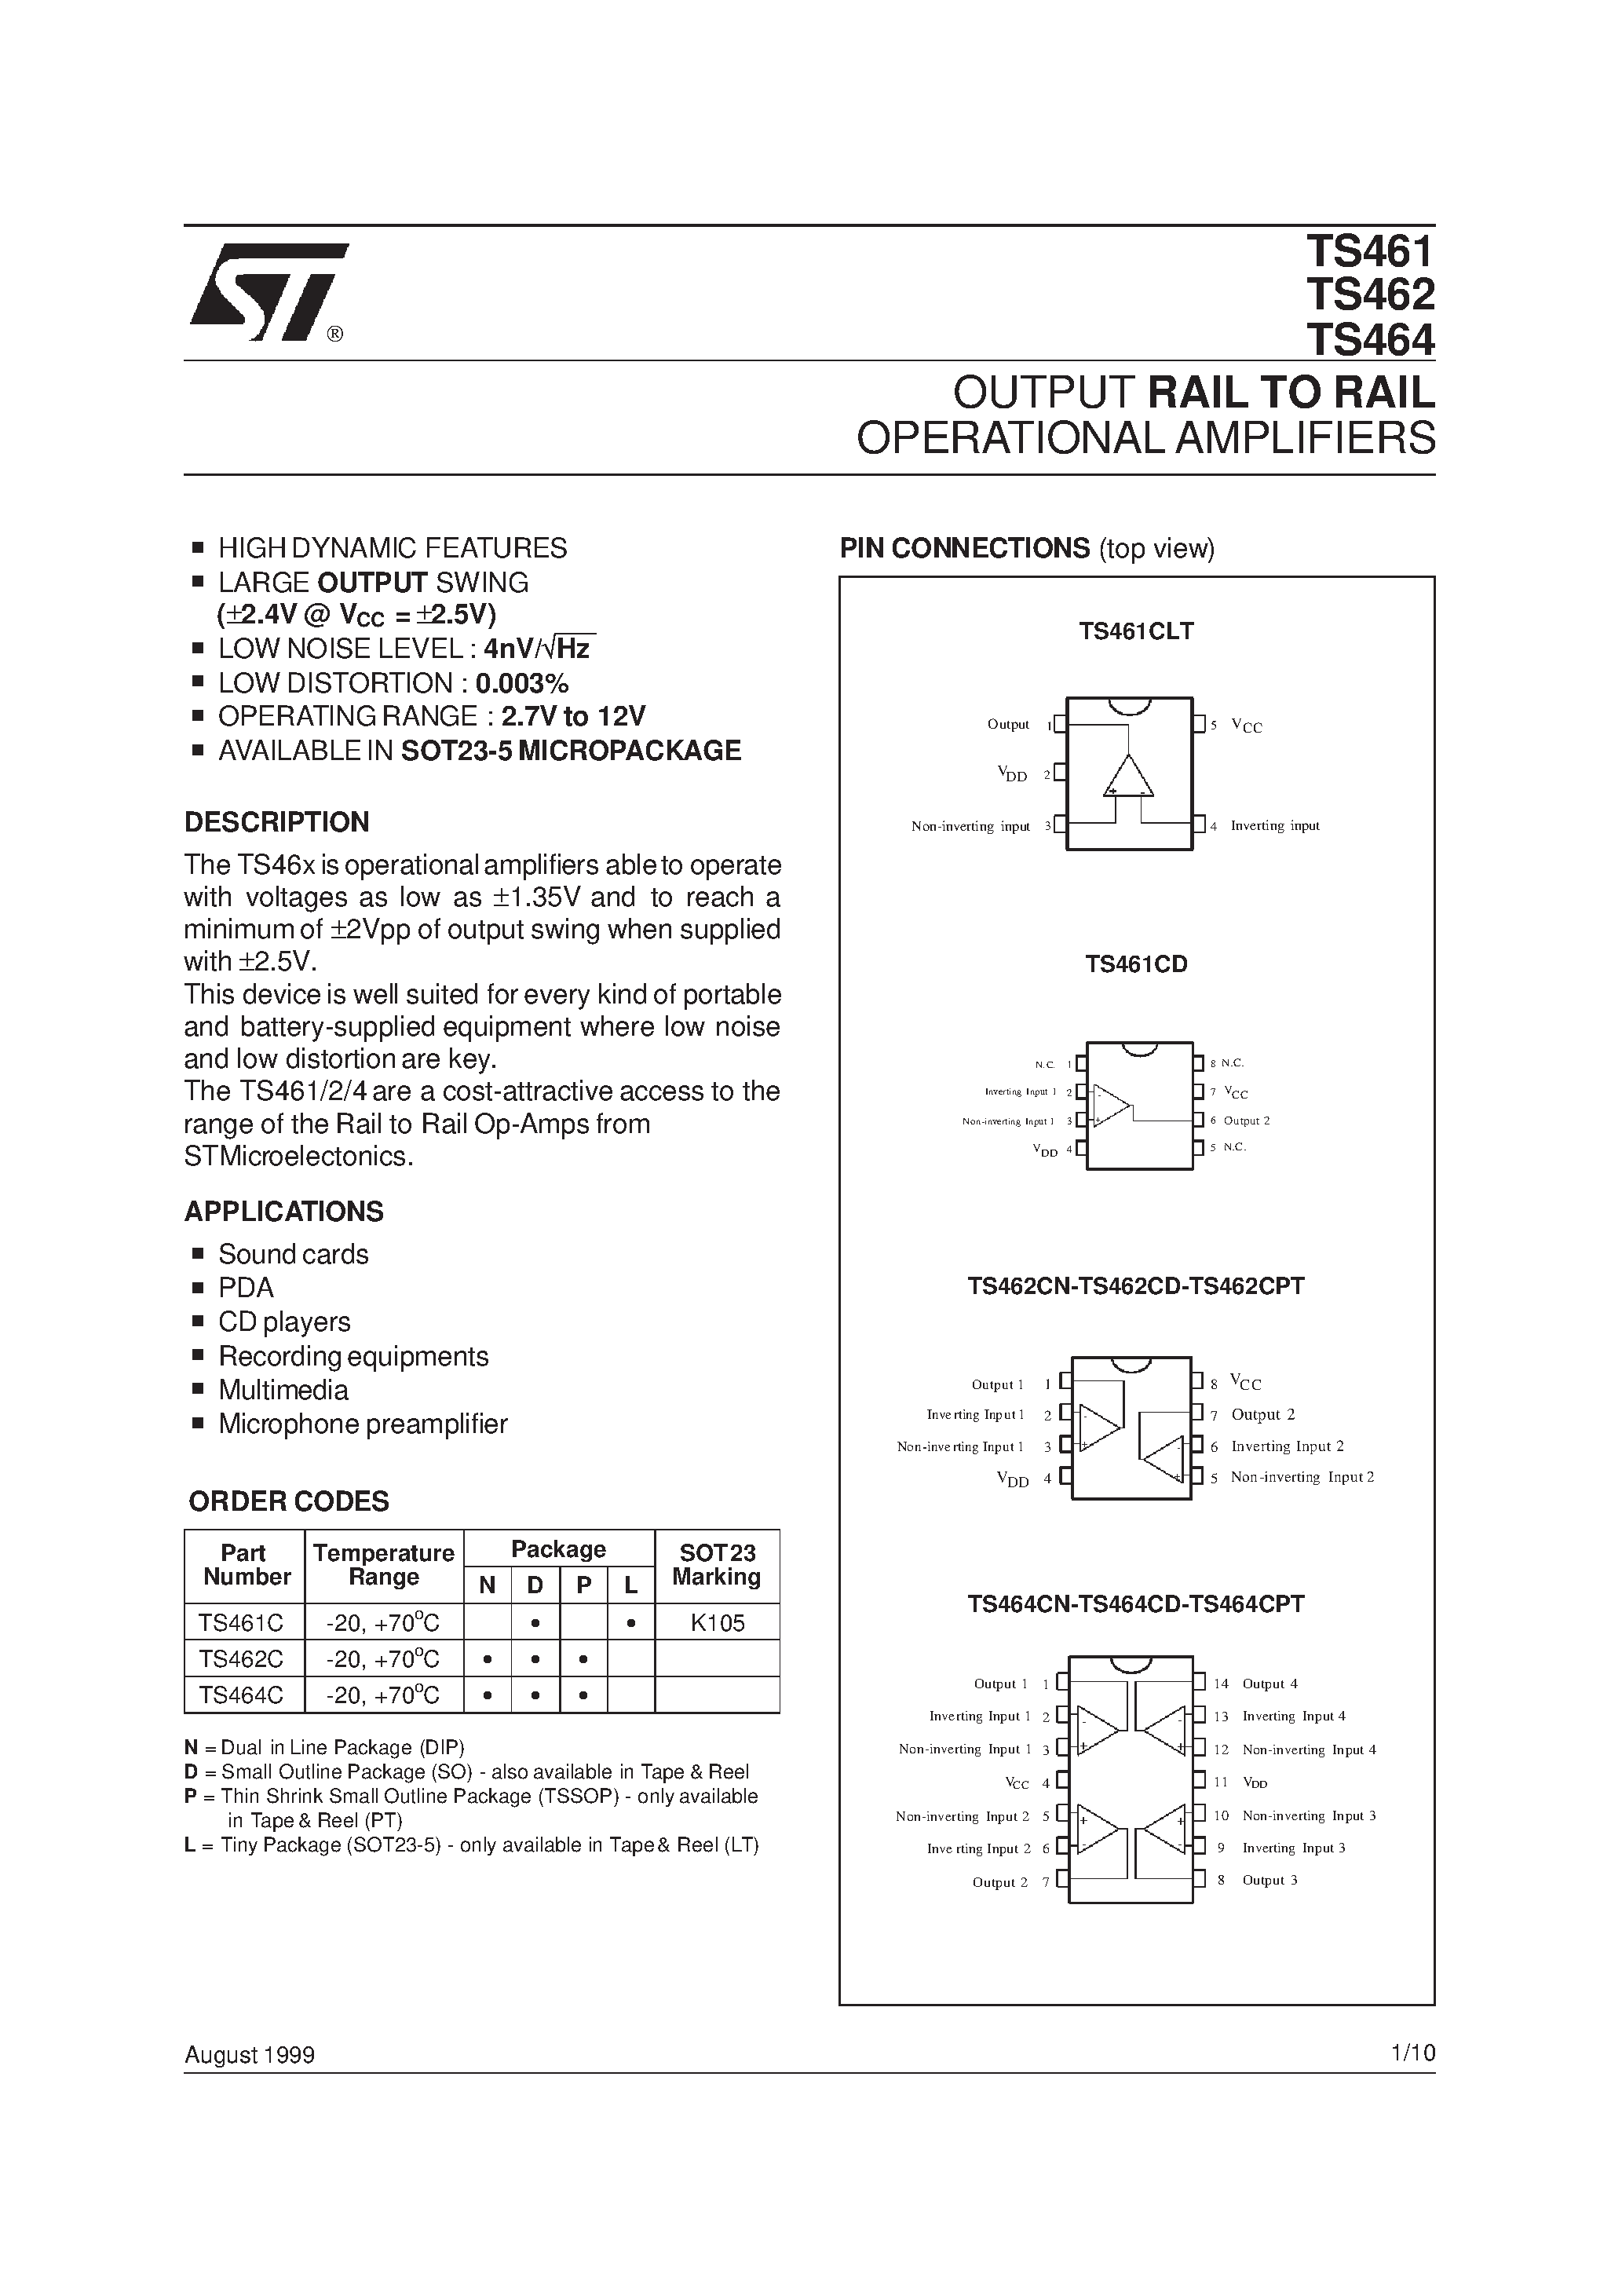 Datasheet TS462 - OUTPUT RAIL TO RAIL OPERATIONAL AMPLIFIERS page 1